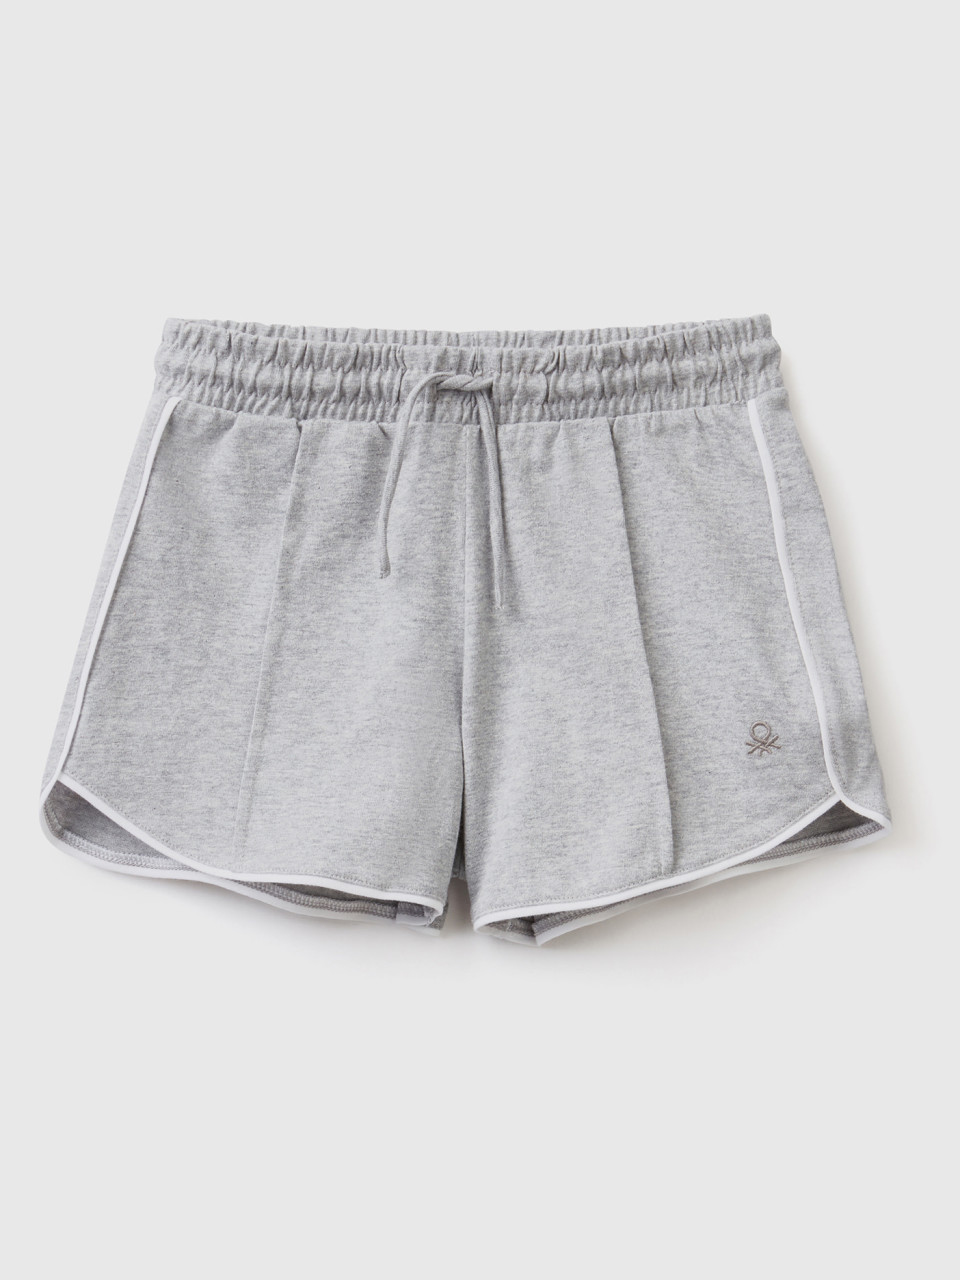 Benetton, 100% Cotton Shorts With Drawstring, Light Gray, Kids